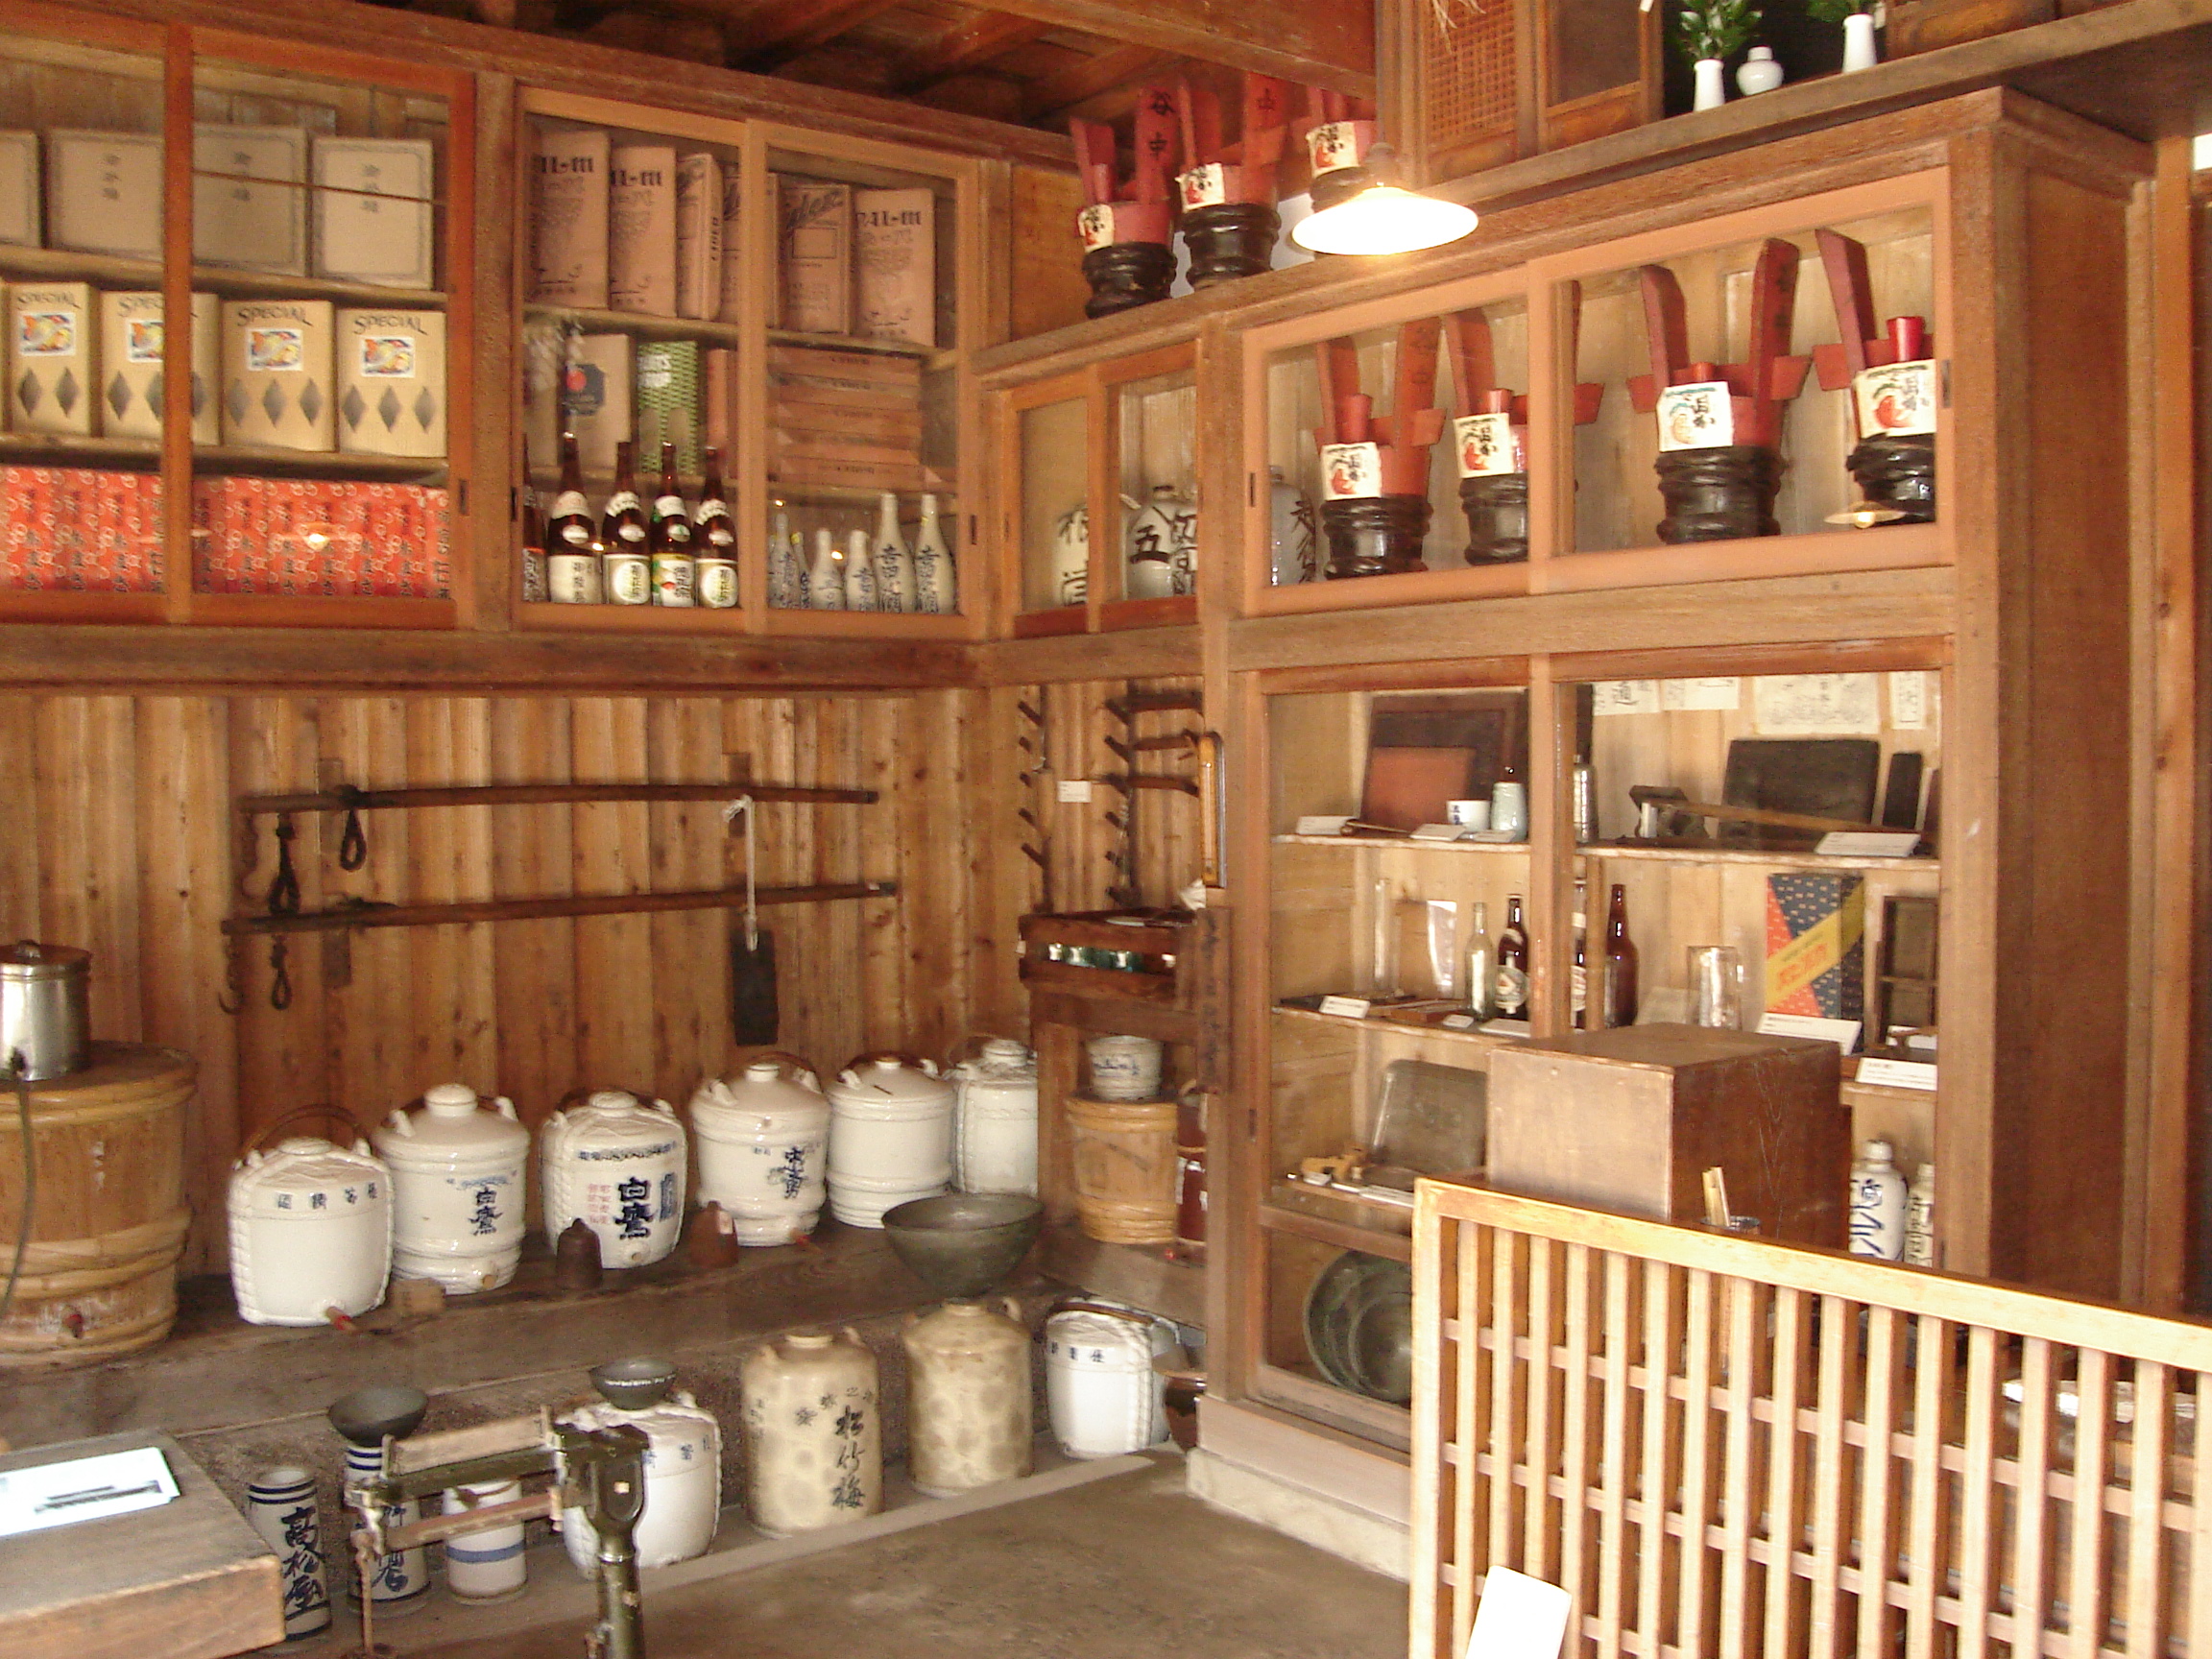 various ceramic pots and bottles on wooden shelves